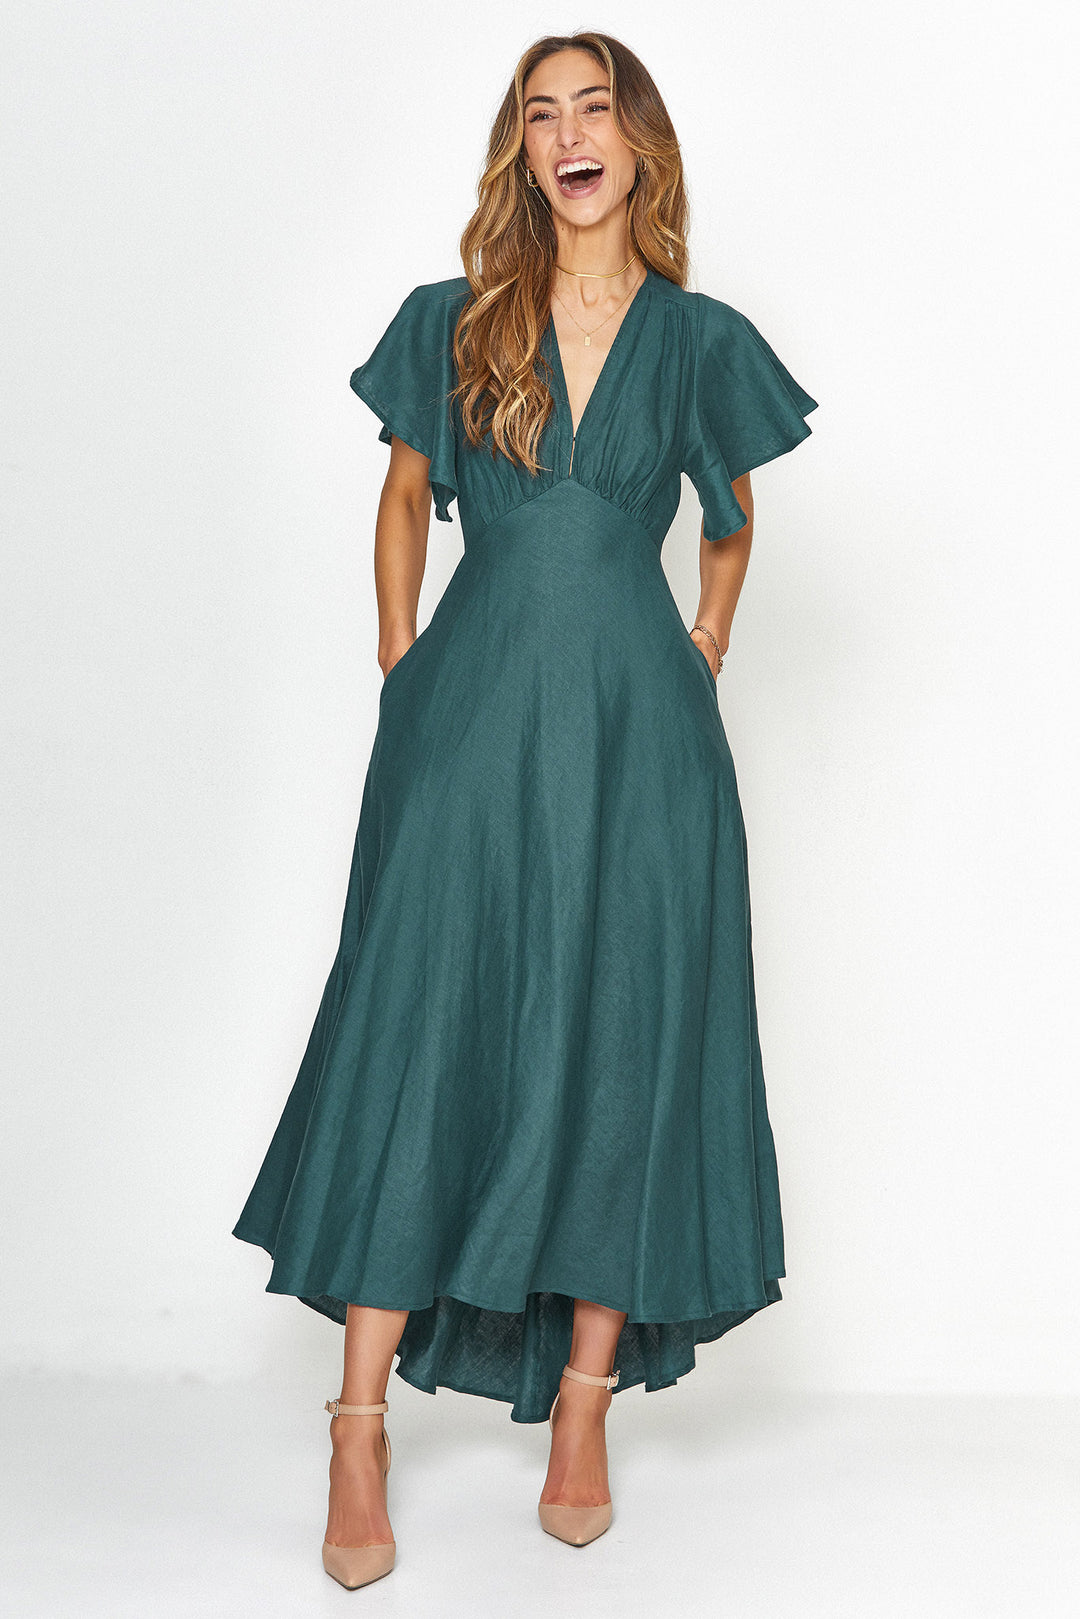 Athena Emerald Dress